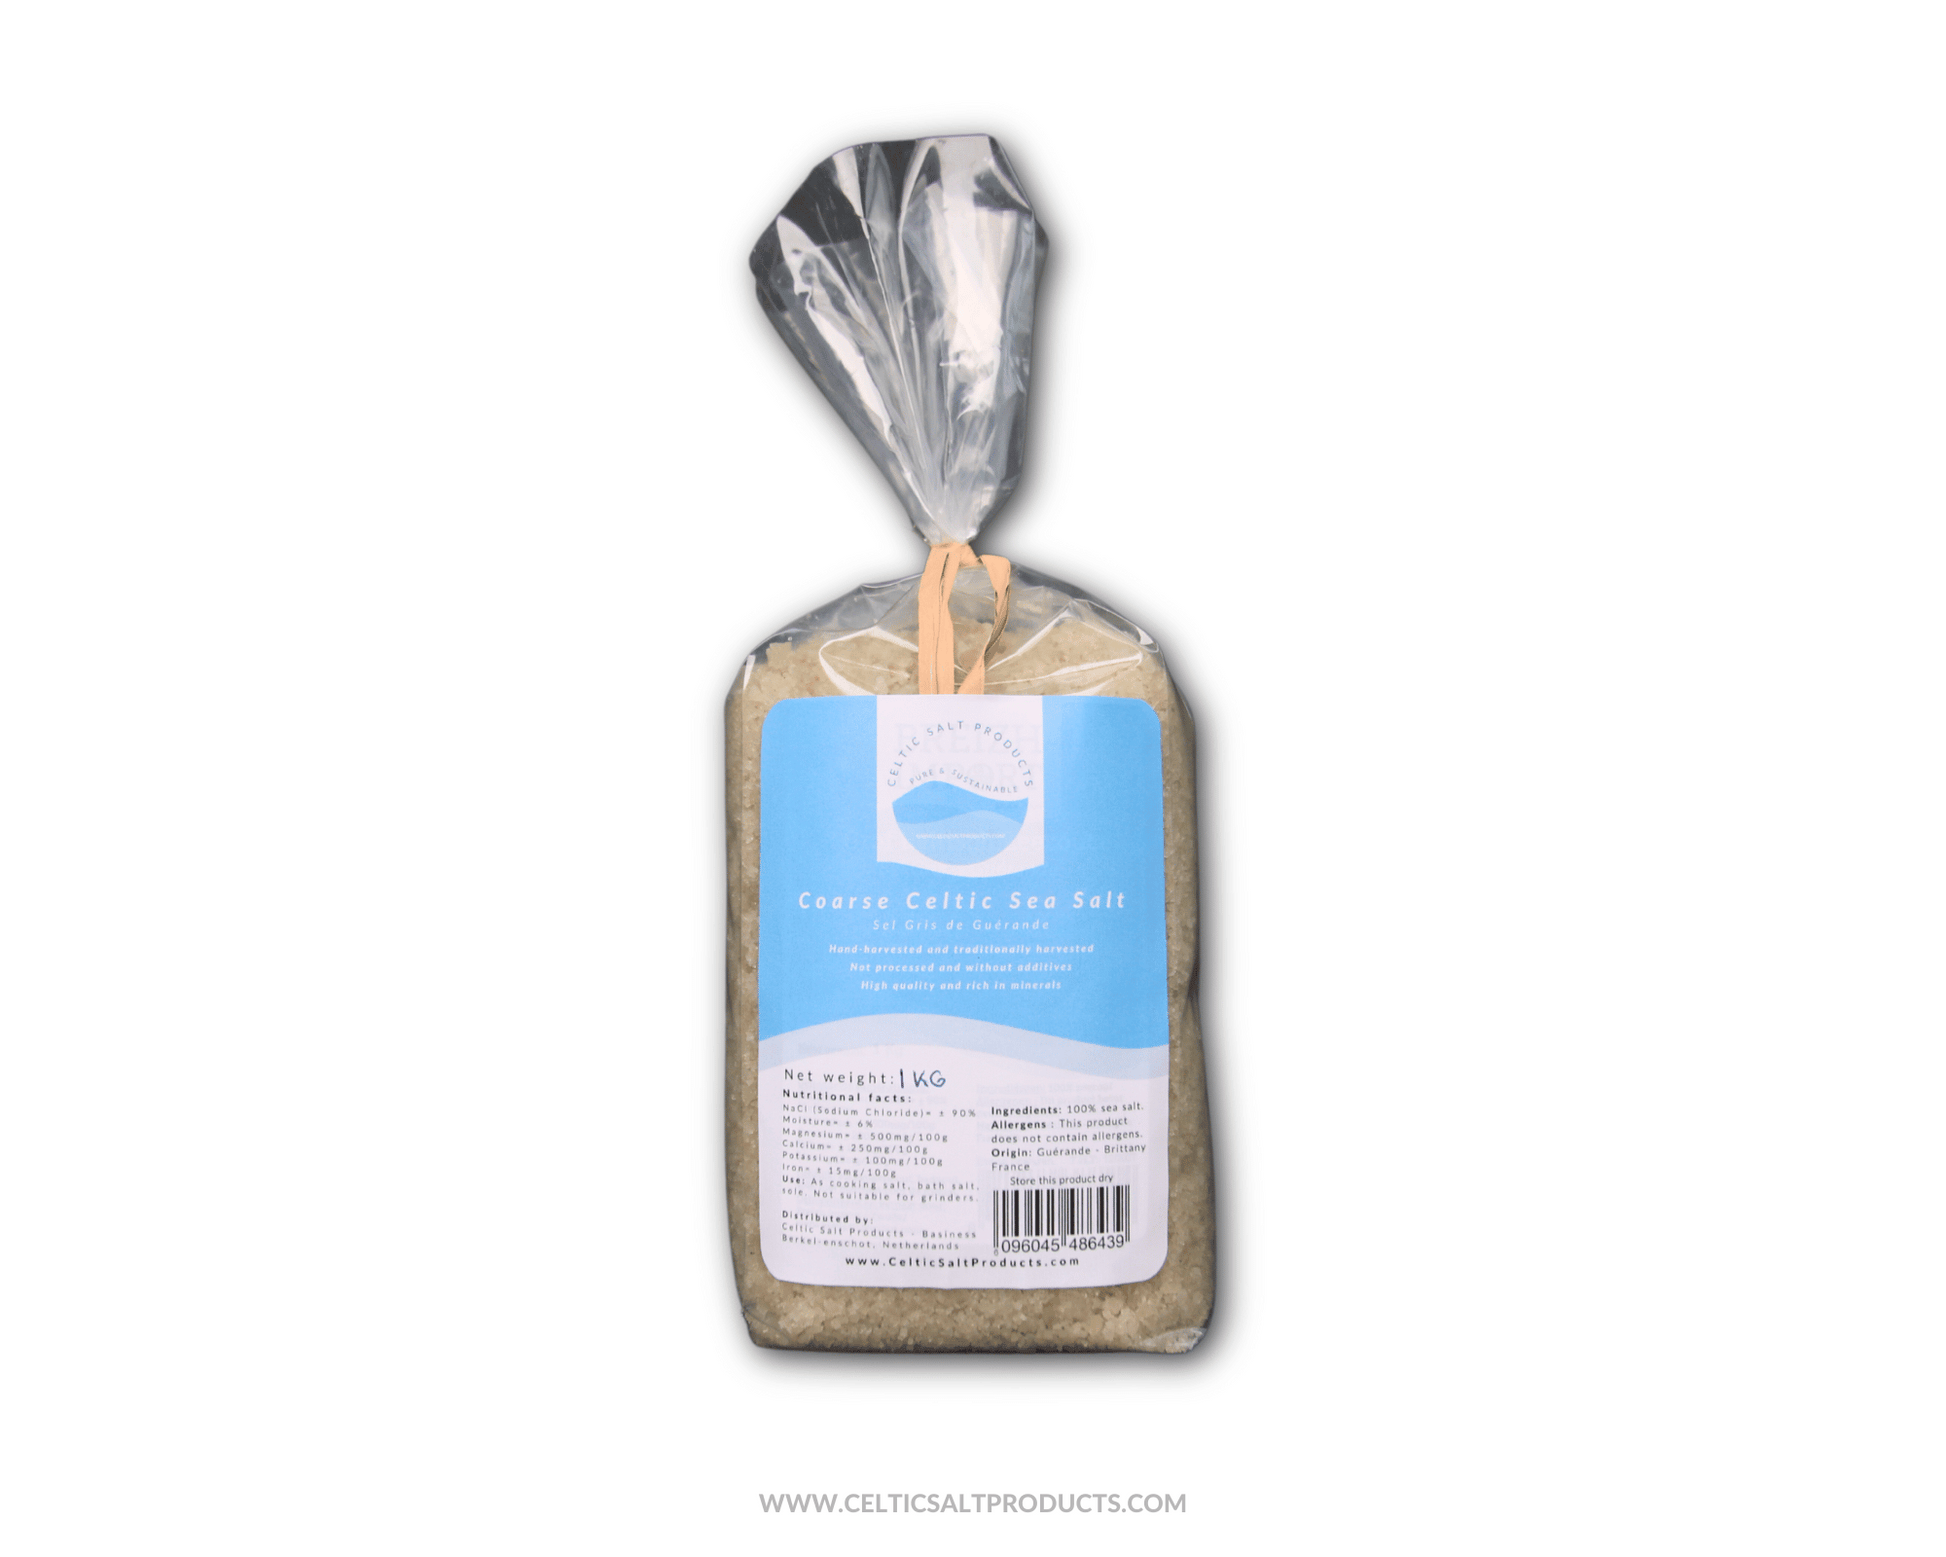 Dr Gram French Celtic Sea Salt (Fine) 200g - Lifewinners Organic